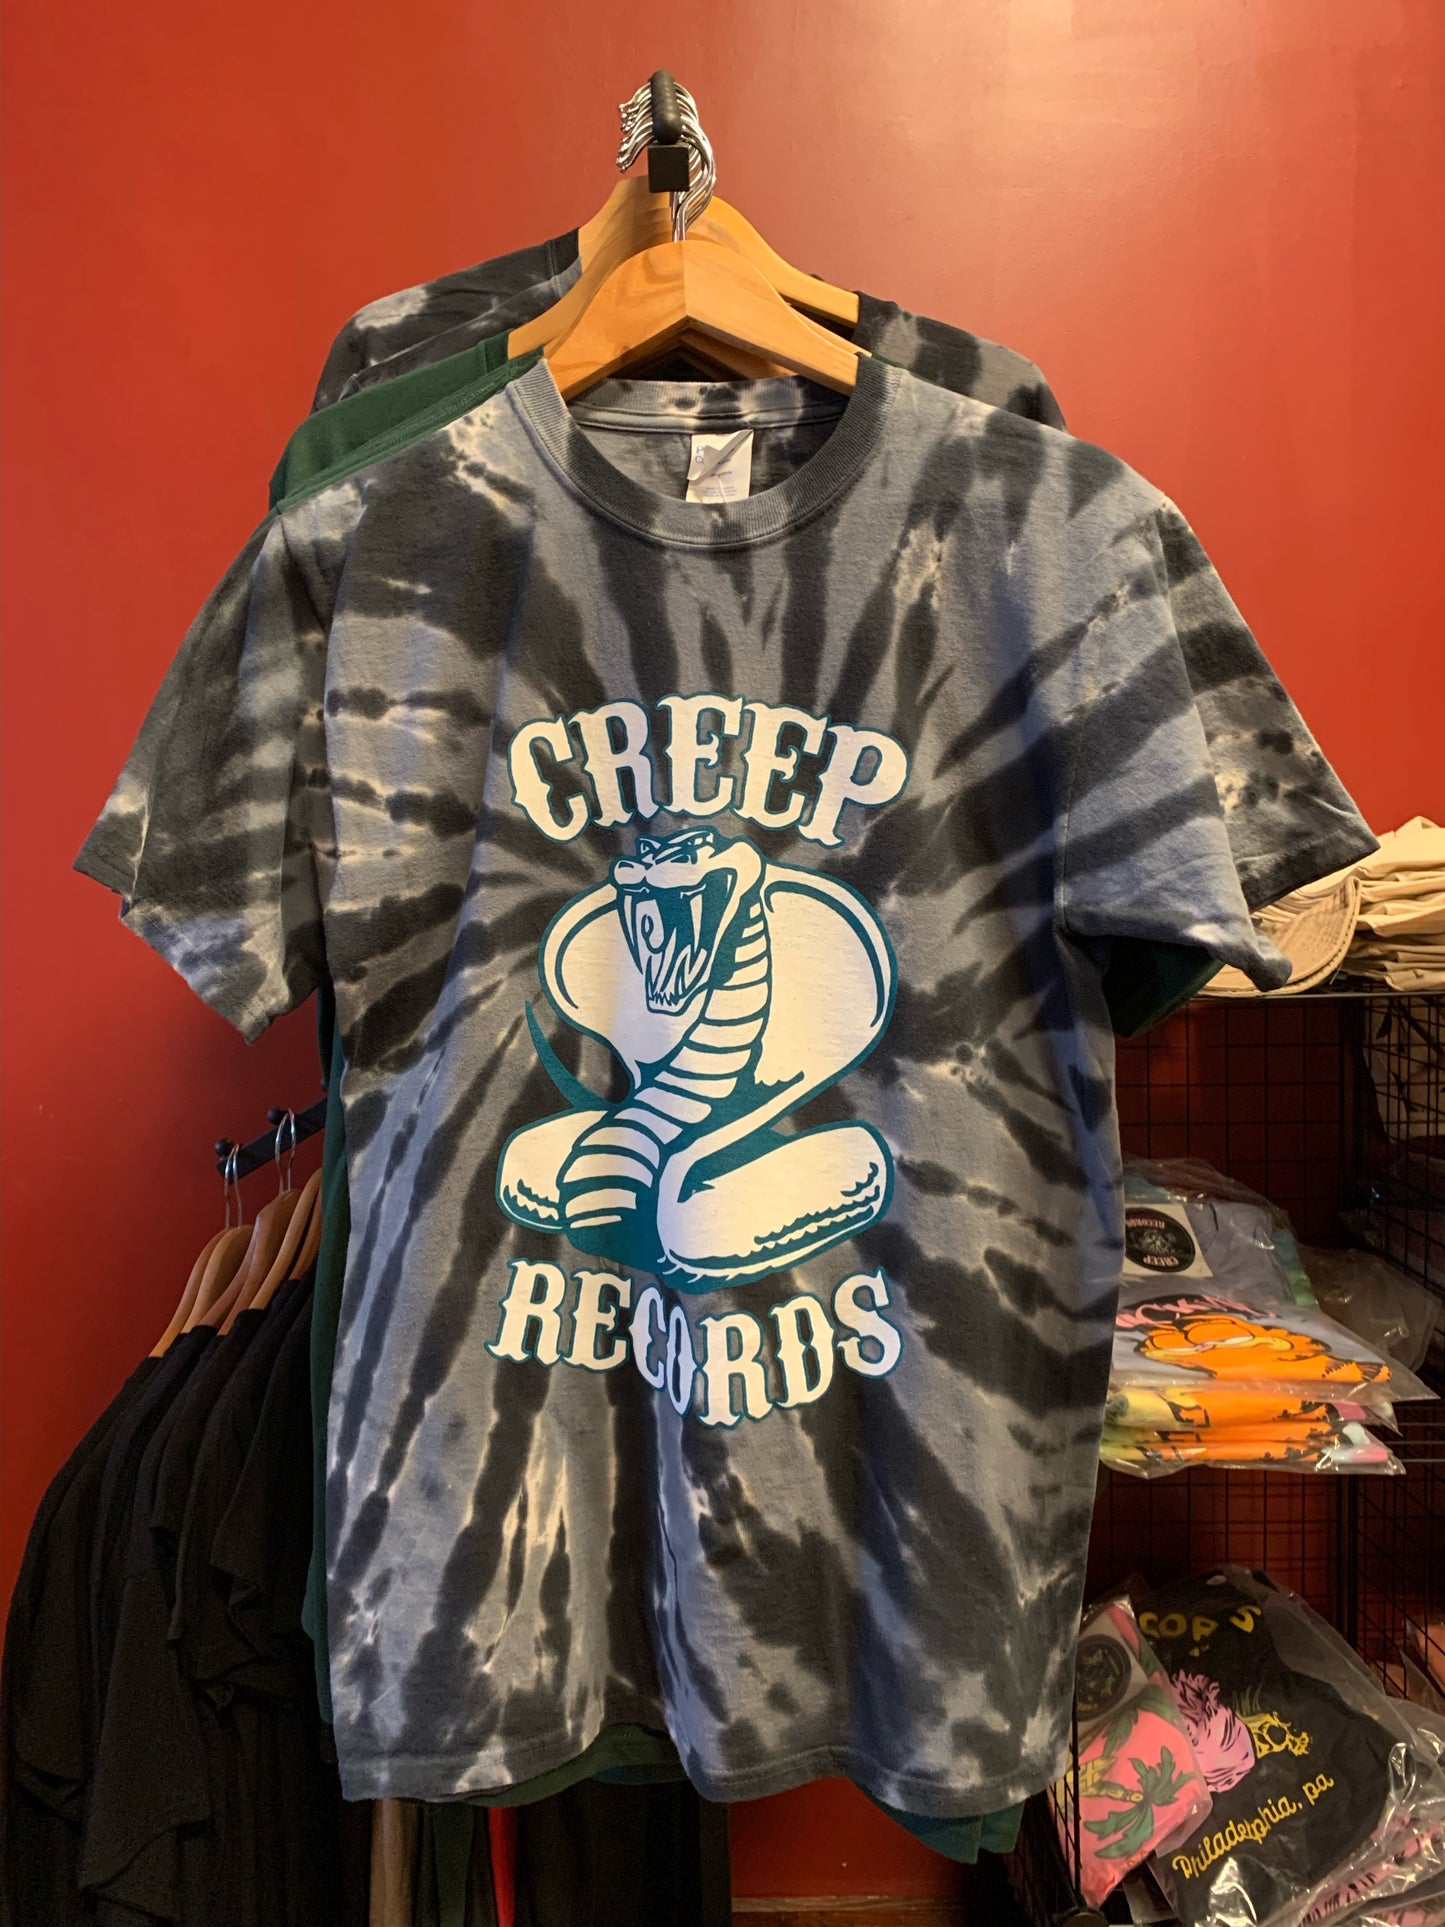 Creep Records Go Birds Snake T-Shirt